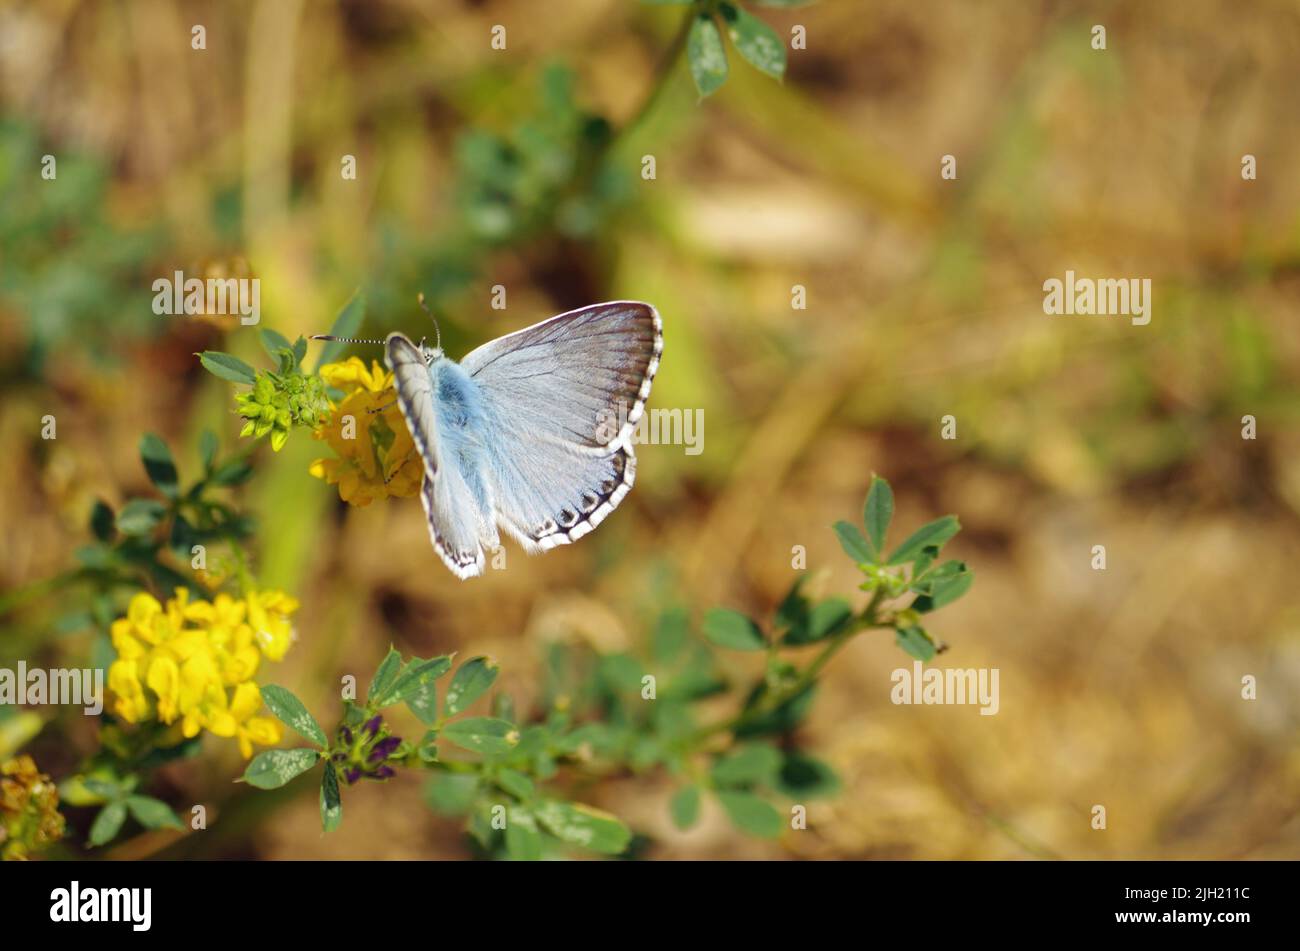 Bläulinge, Lycaenidae, Schmetterling. Foto de stock